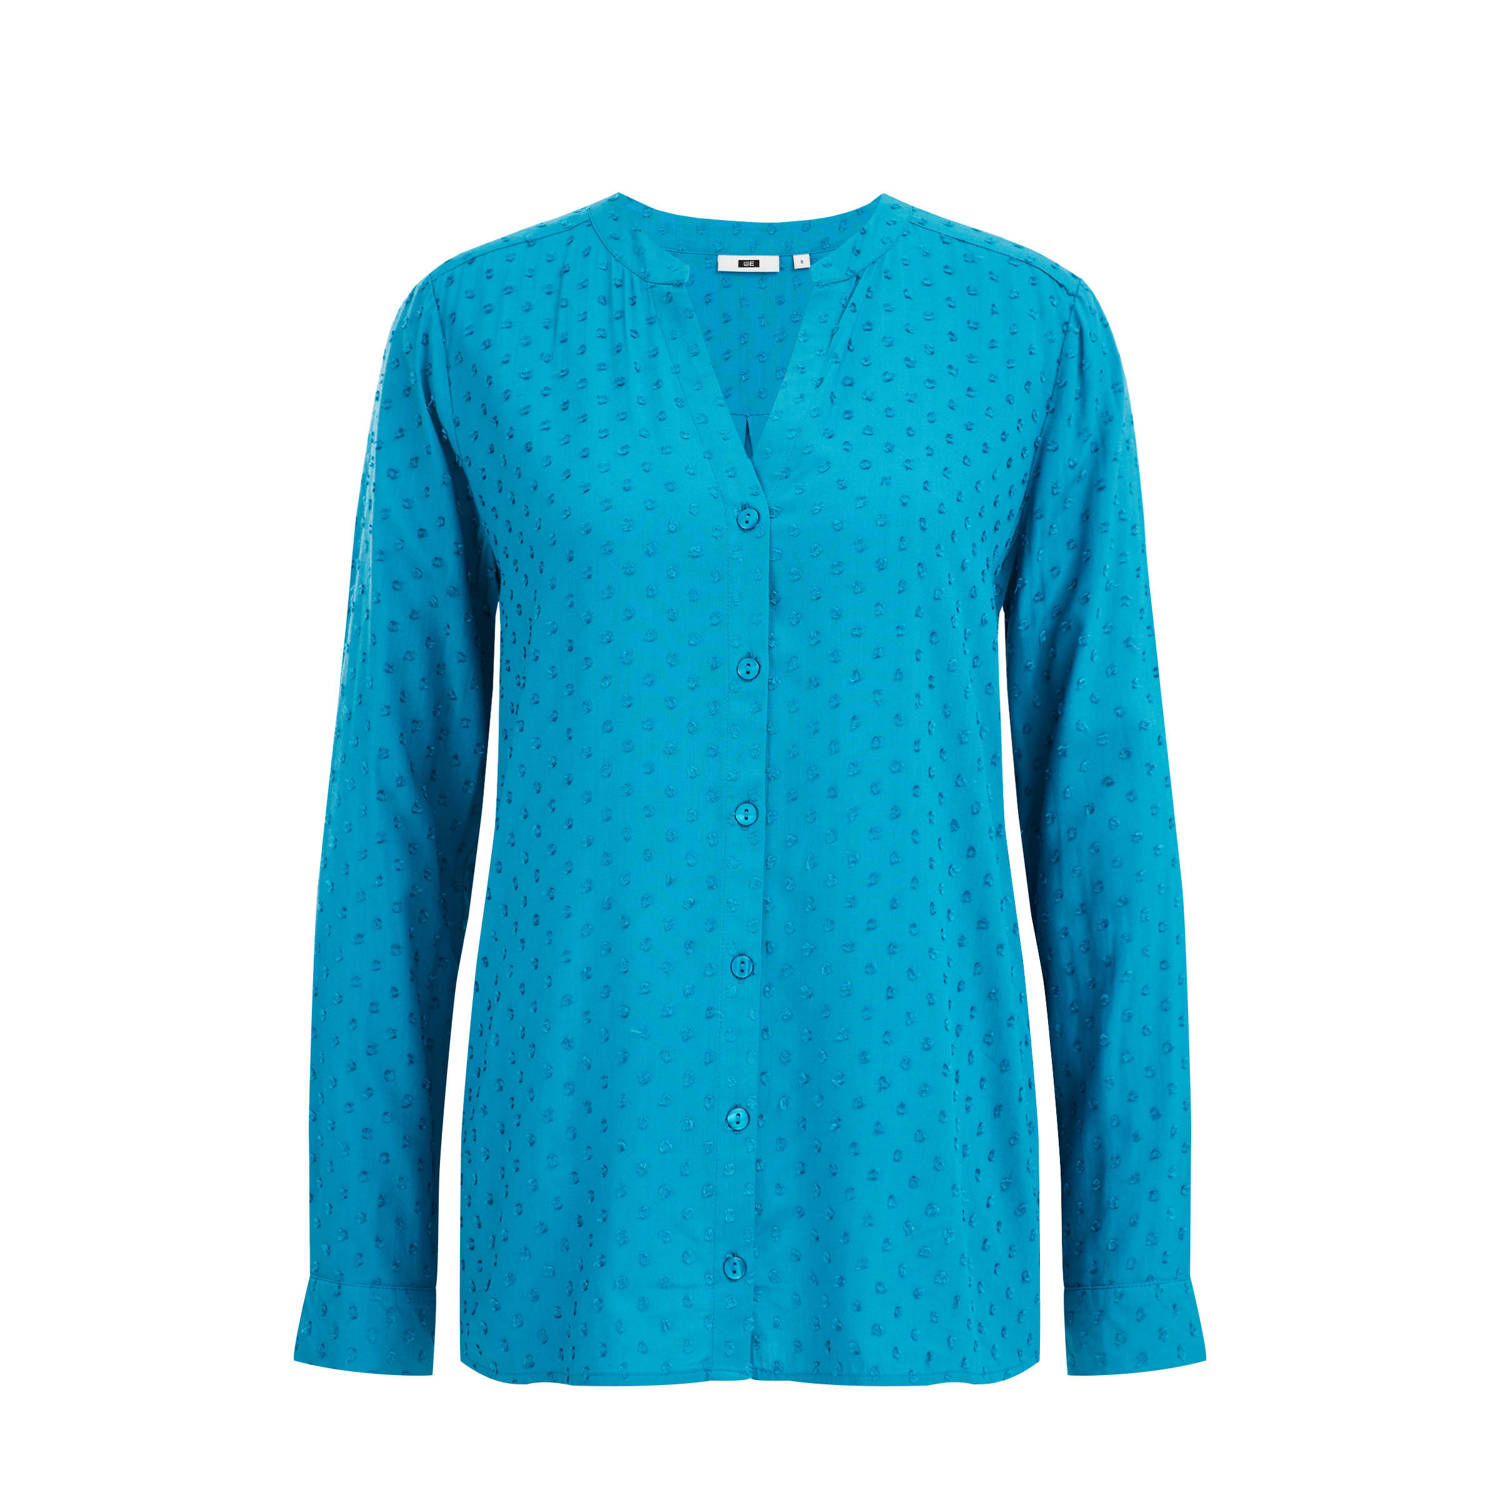 WE Fashion blouse met textuur blauw